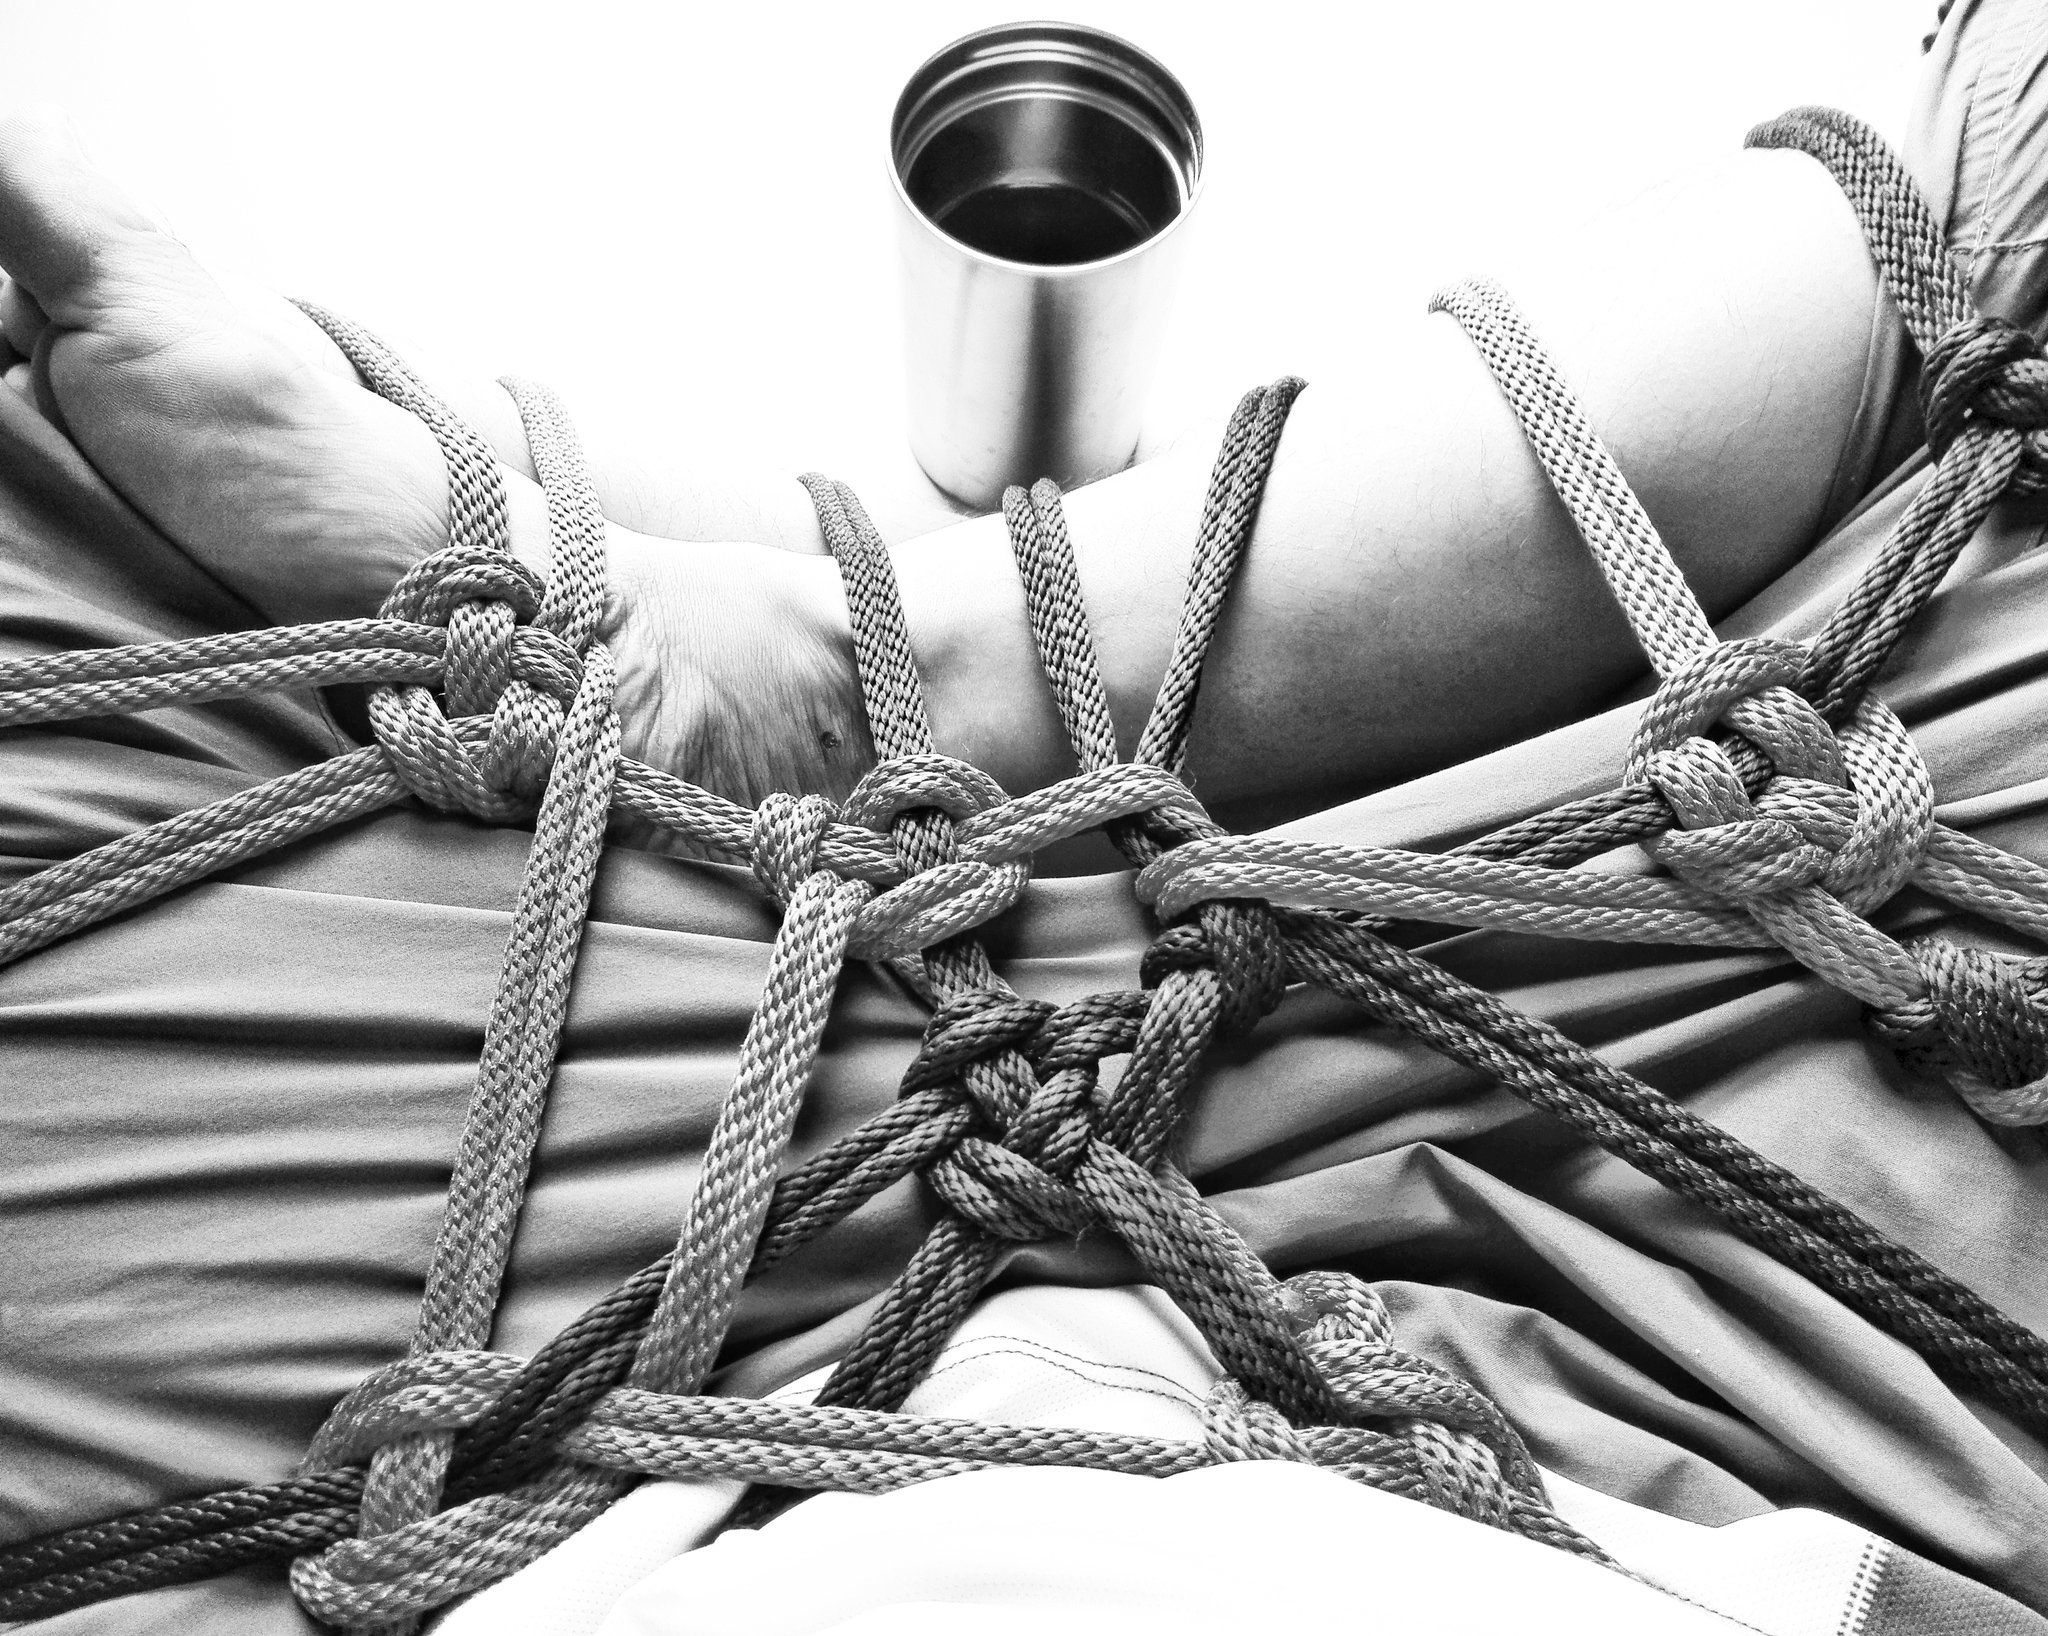 “Morning rope, long time no tie legs together #shibari #kinbaku #bondage #b...